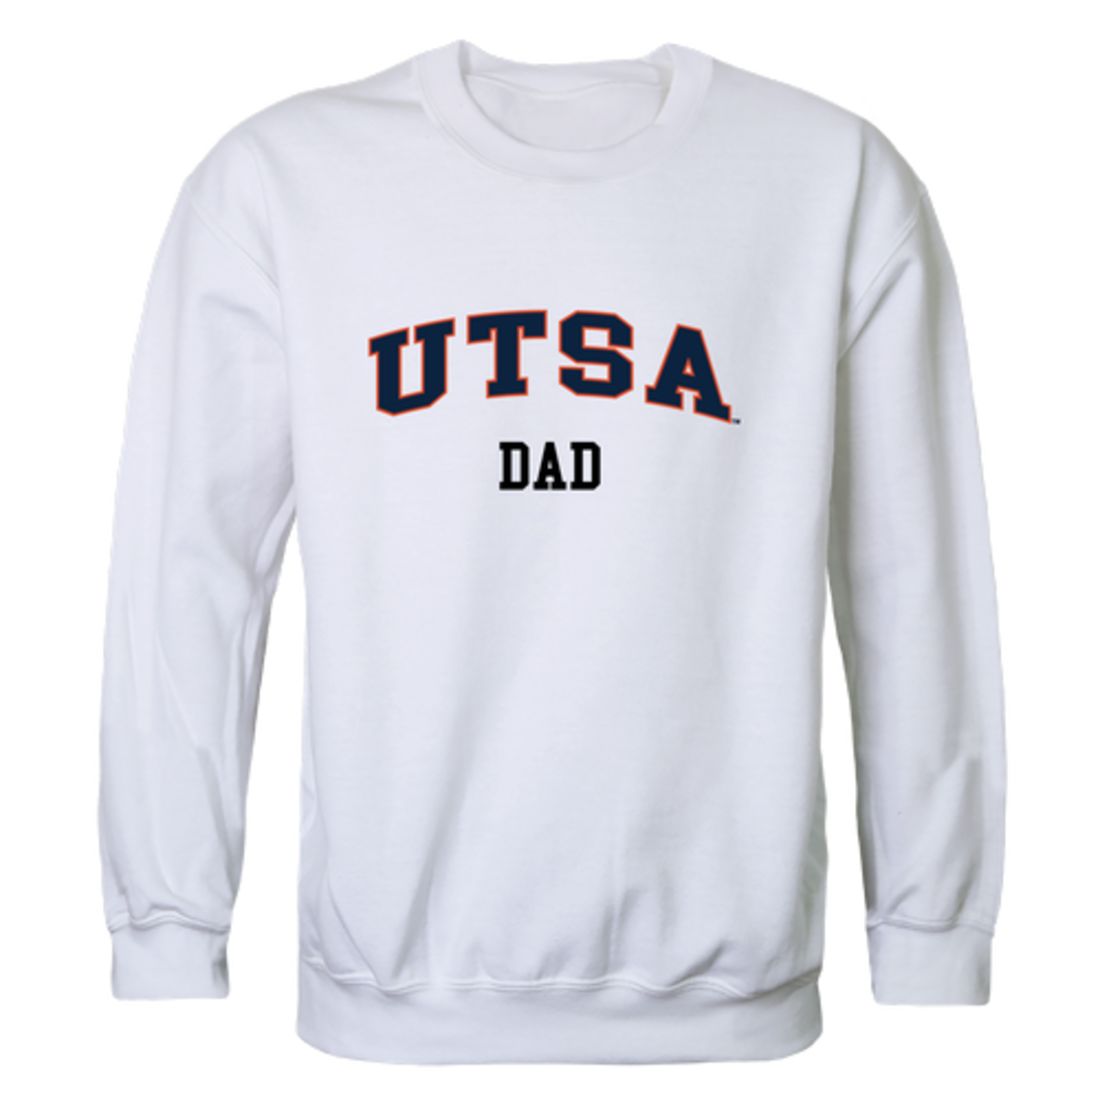 UTSA University of Texas at San Antonio Roadrunners Dad Fleece Crewneck Pullover Sweatshirt Heather Grey-Campus-Wardrobe